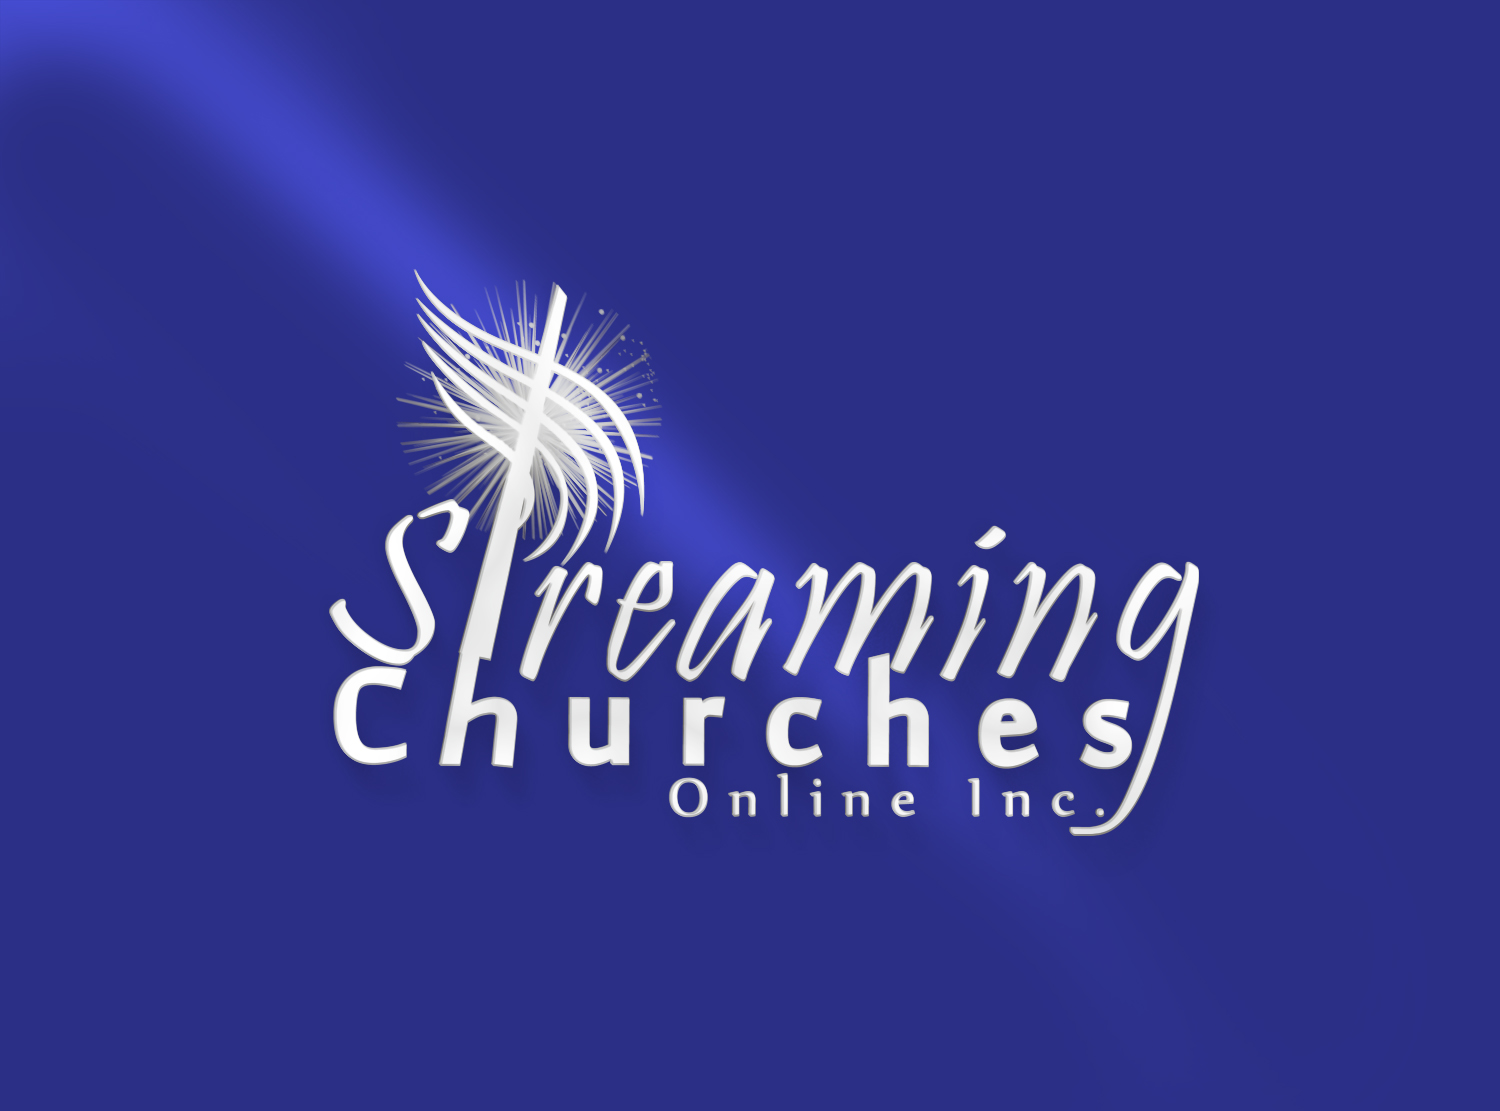 6320_Streaming_Churches_Online_Inc_mockup_logo_01(1).jpg